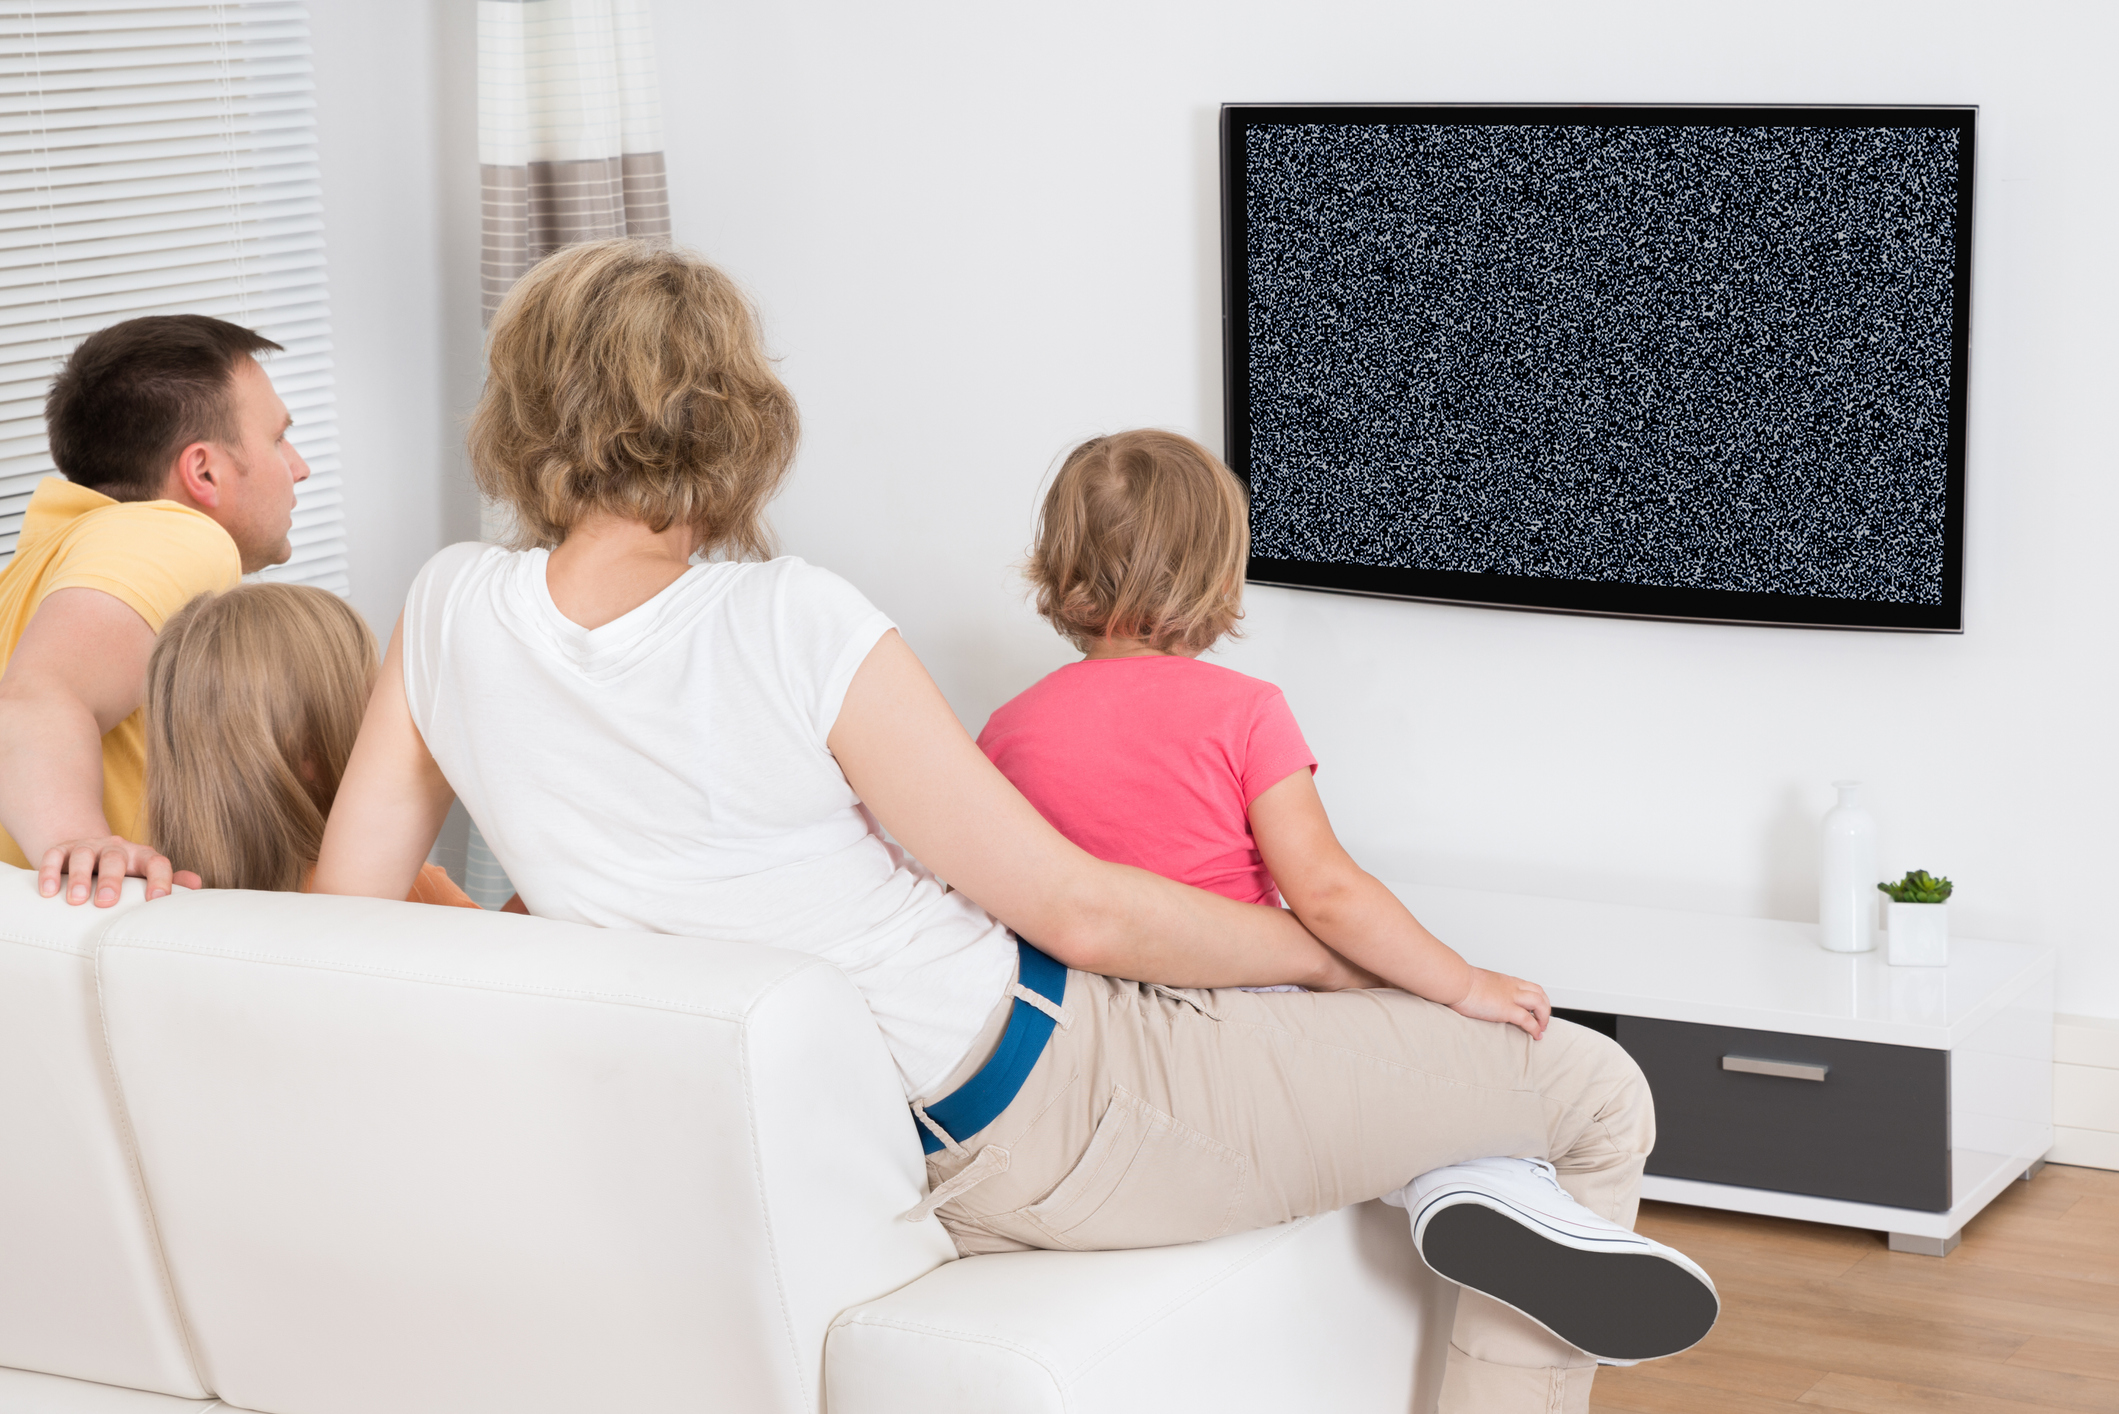 Тревога по телевизору. Семья у телевизора. Семья на диване перед телевизором. Семья перед телевизором с пультом. Семья сидит перед телевизором.